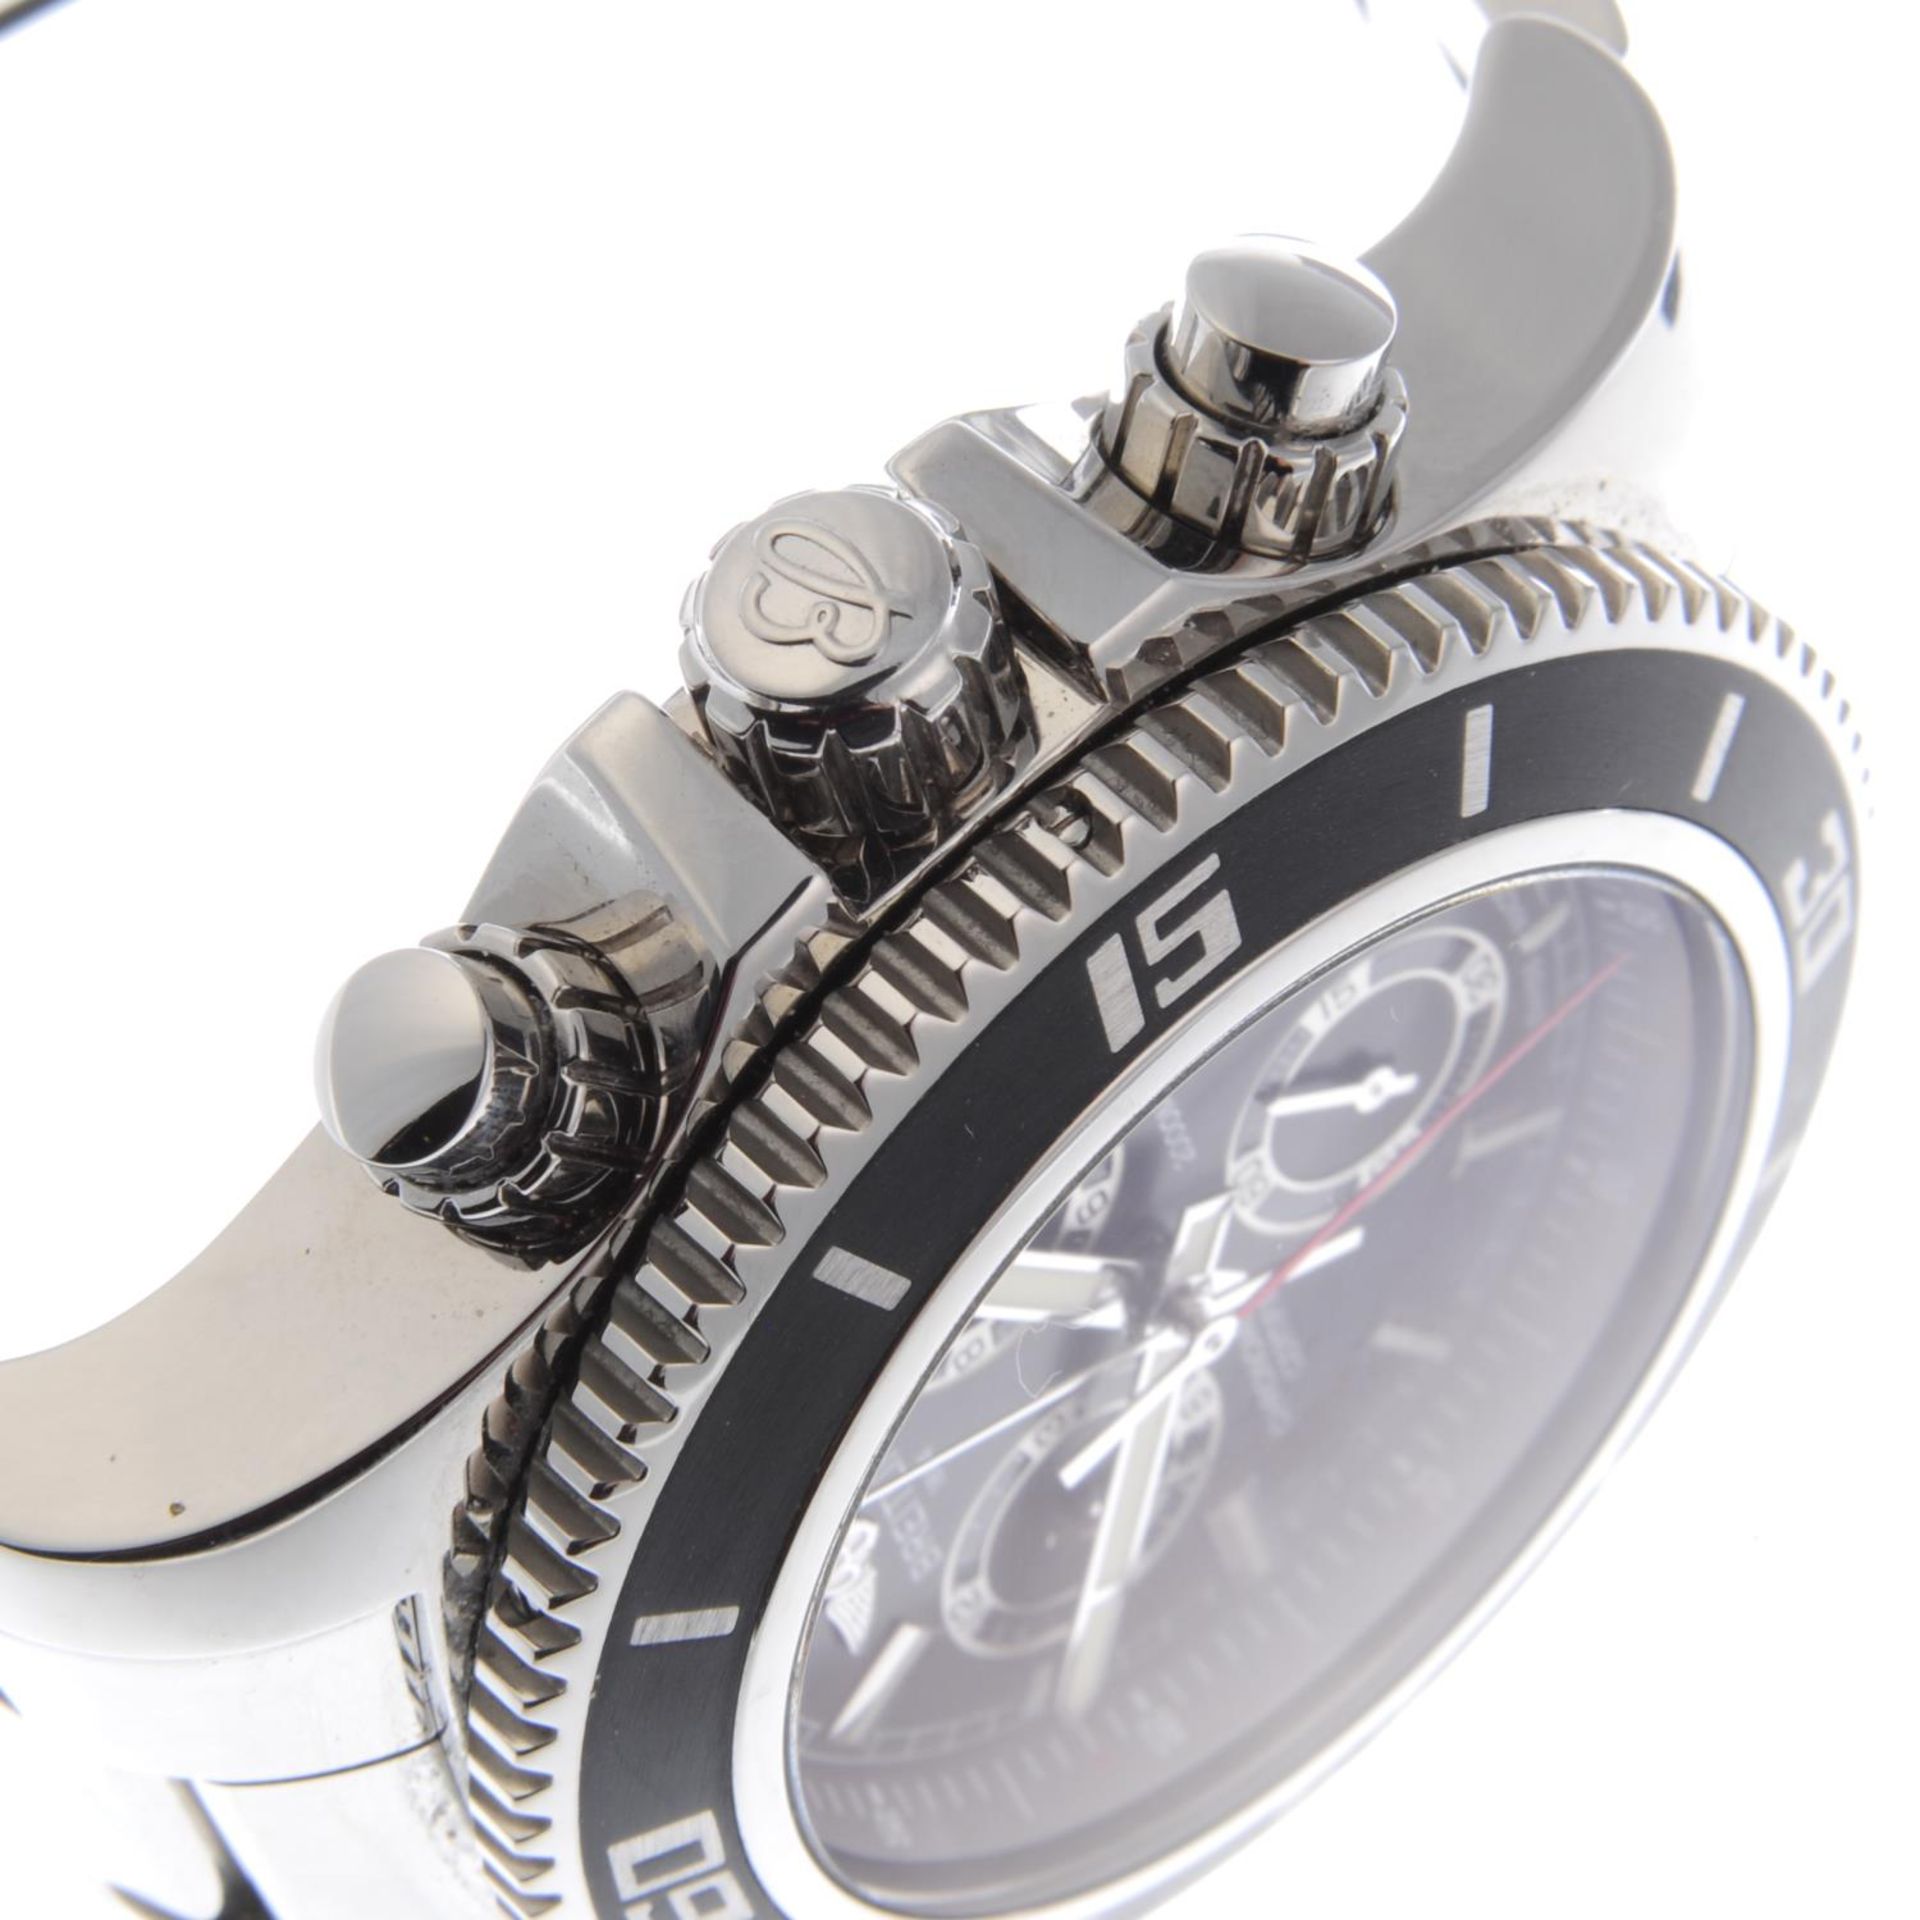 BREITLING - a gentleman's SuperOcean chronograph bracelet watch. - Image 4 of 7